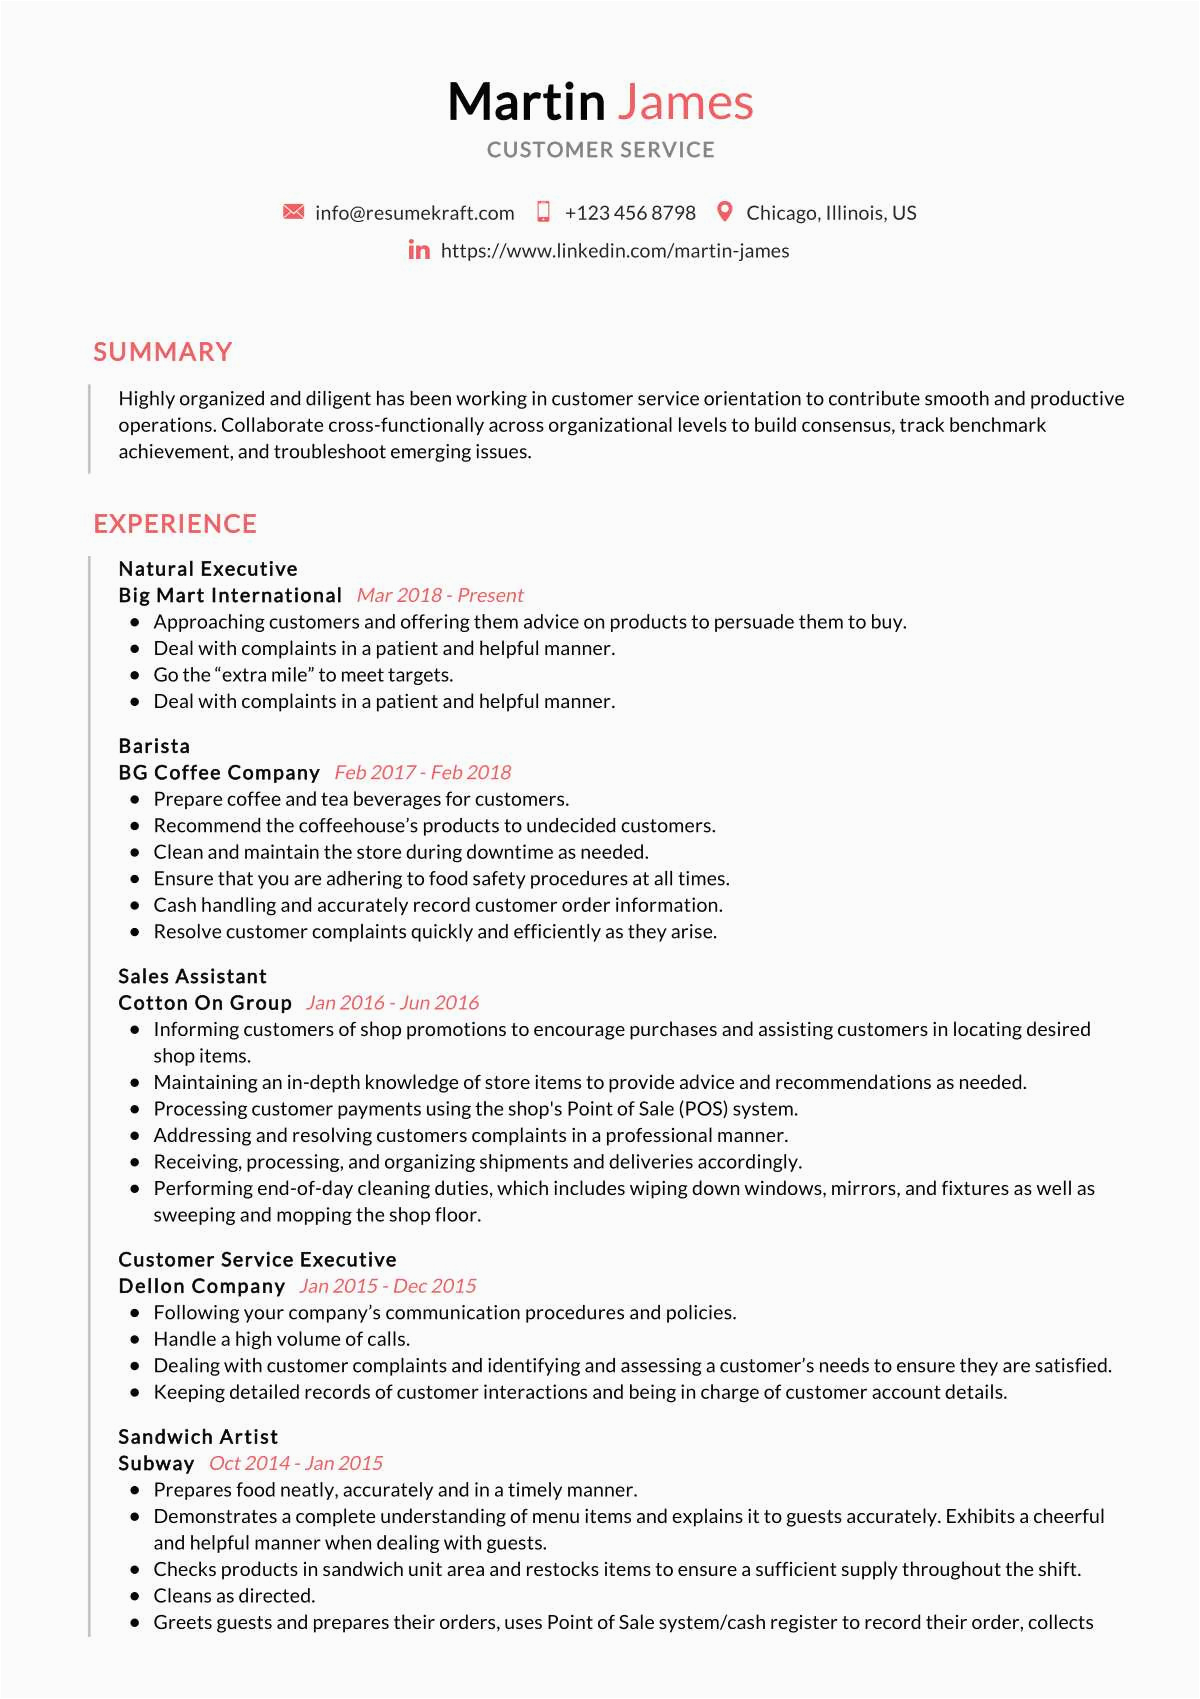 Sample Professional Resume for Customer Service Customer Service Resume Example 2021 Resumekraft